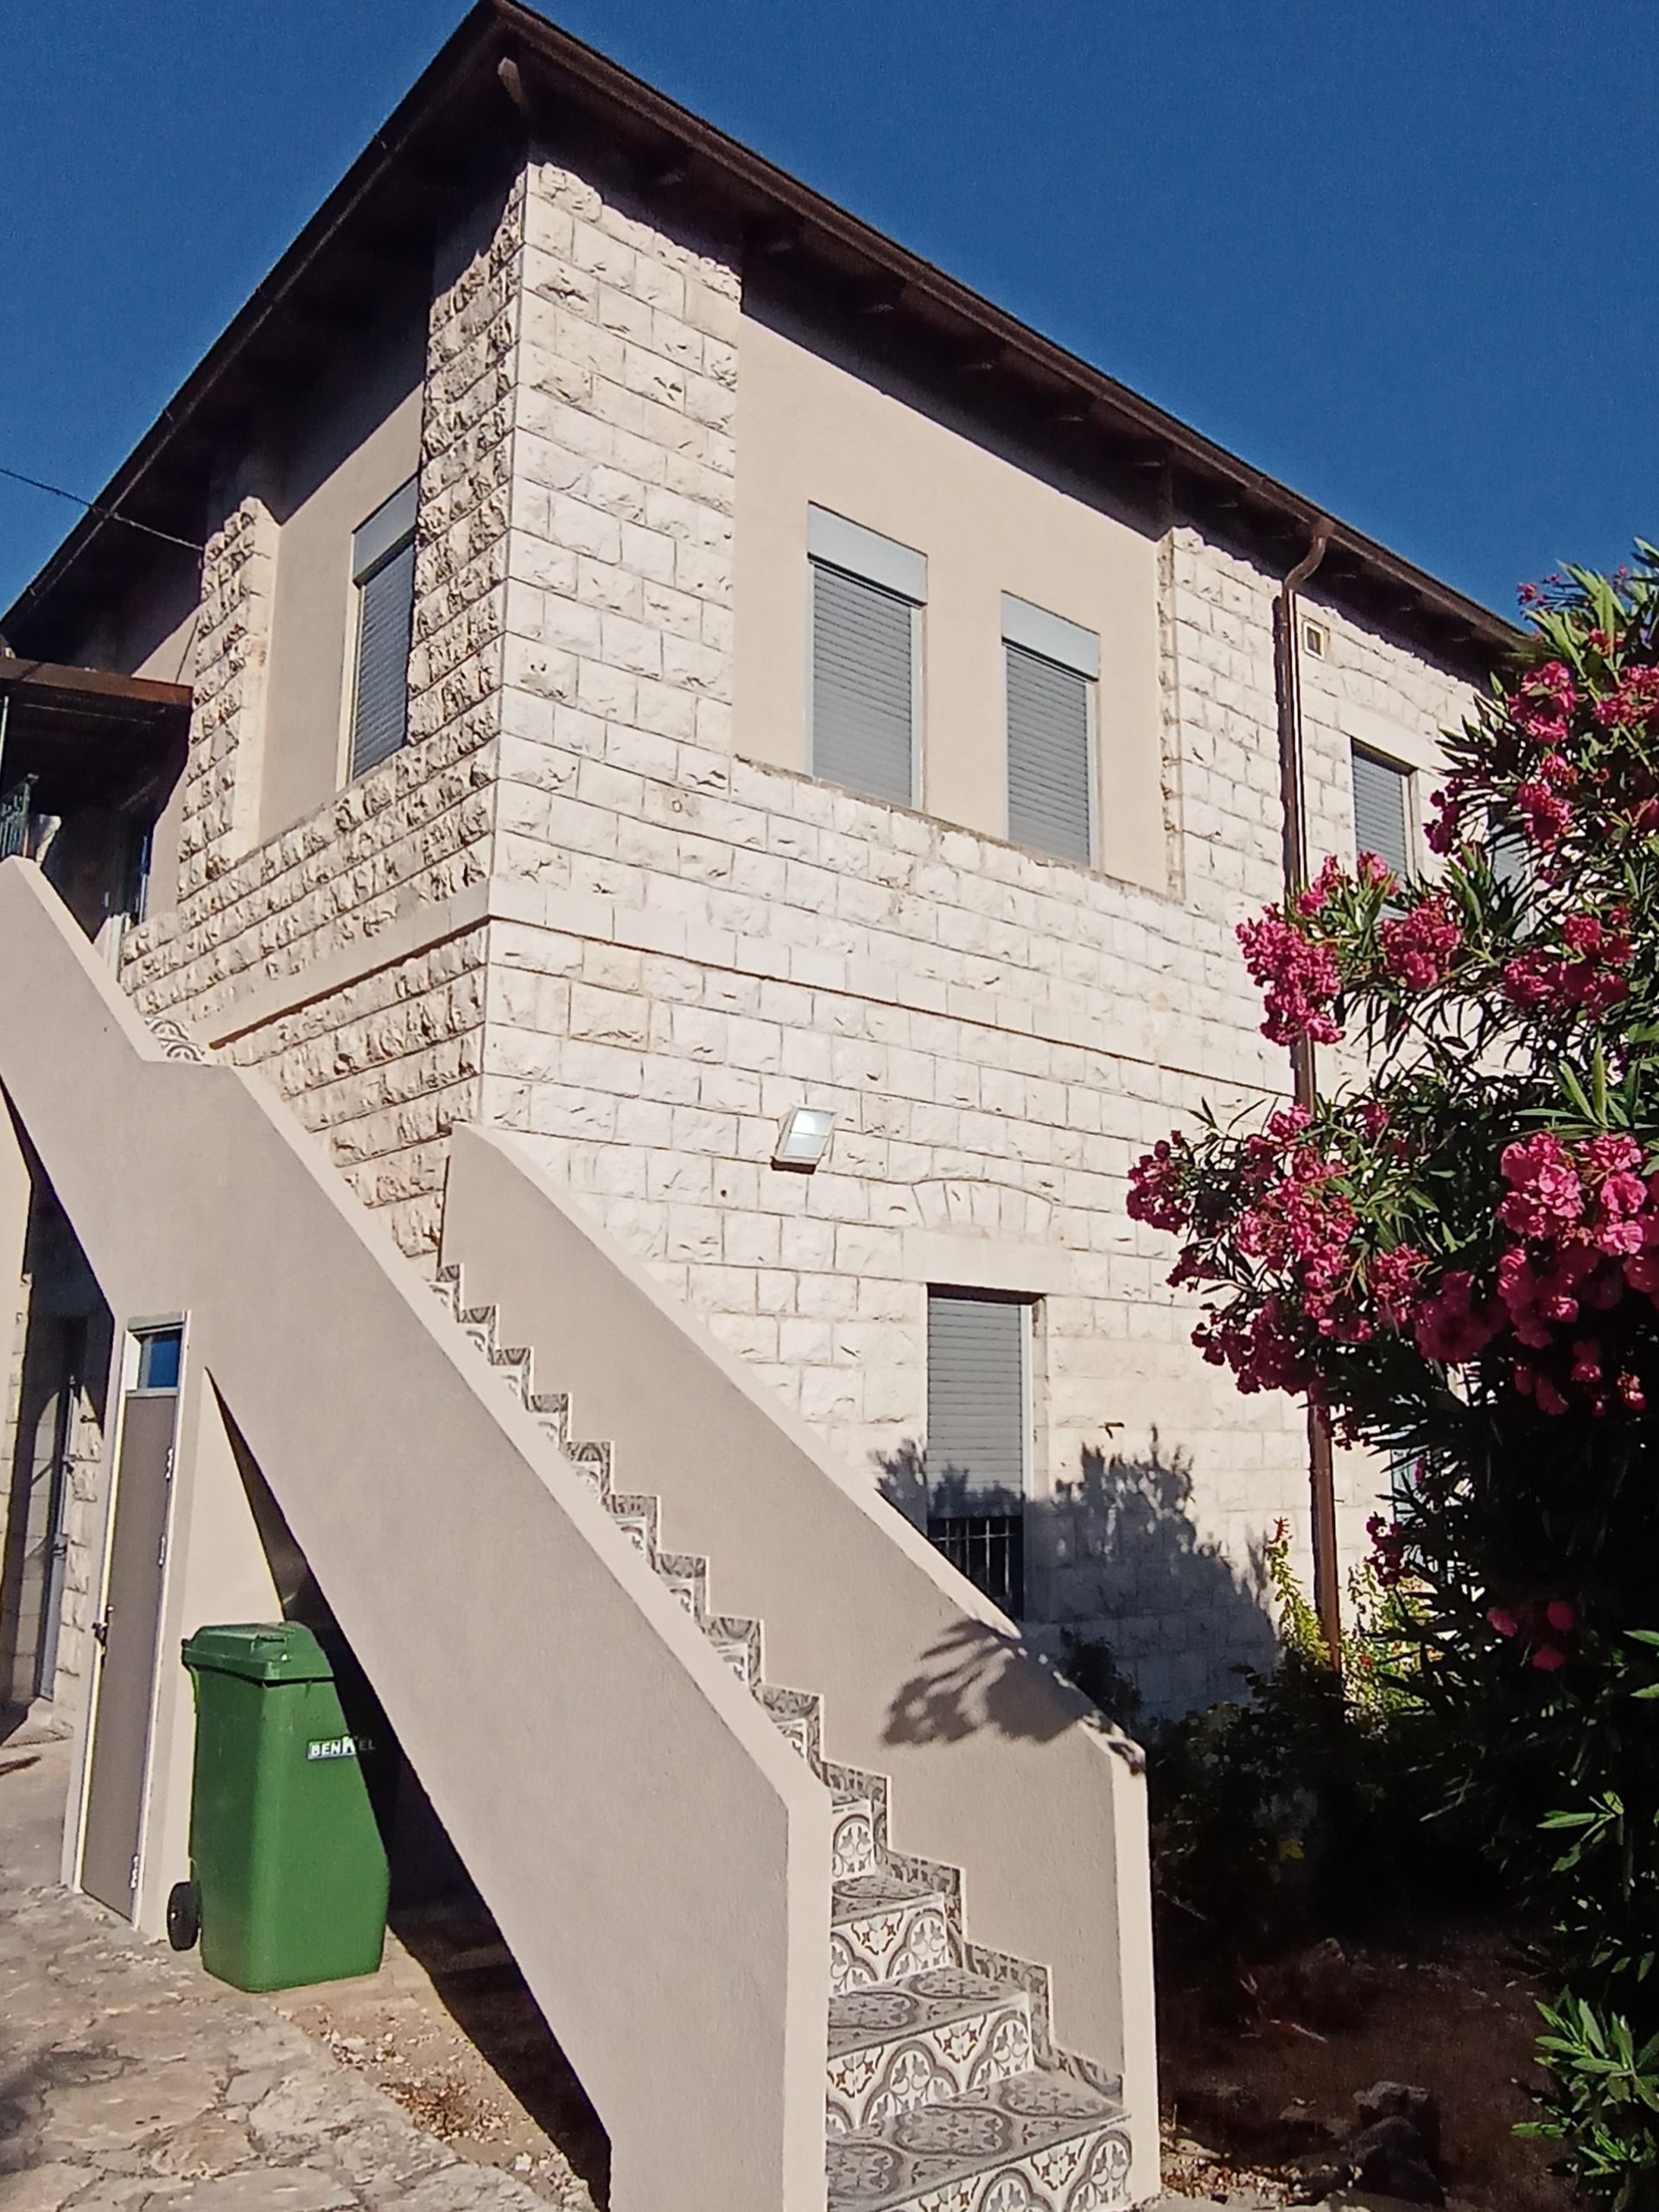 Christian pilgrimage accommodation in Nazareth